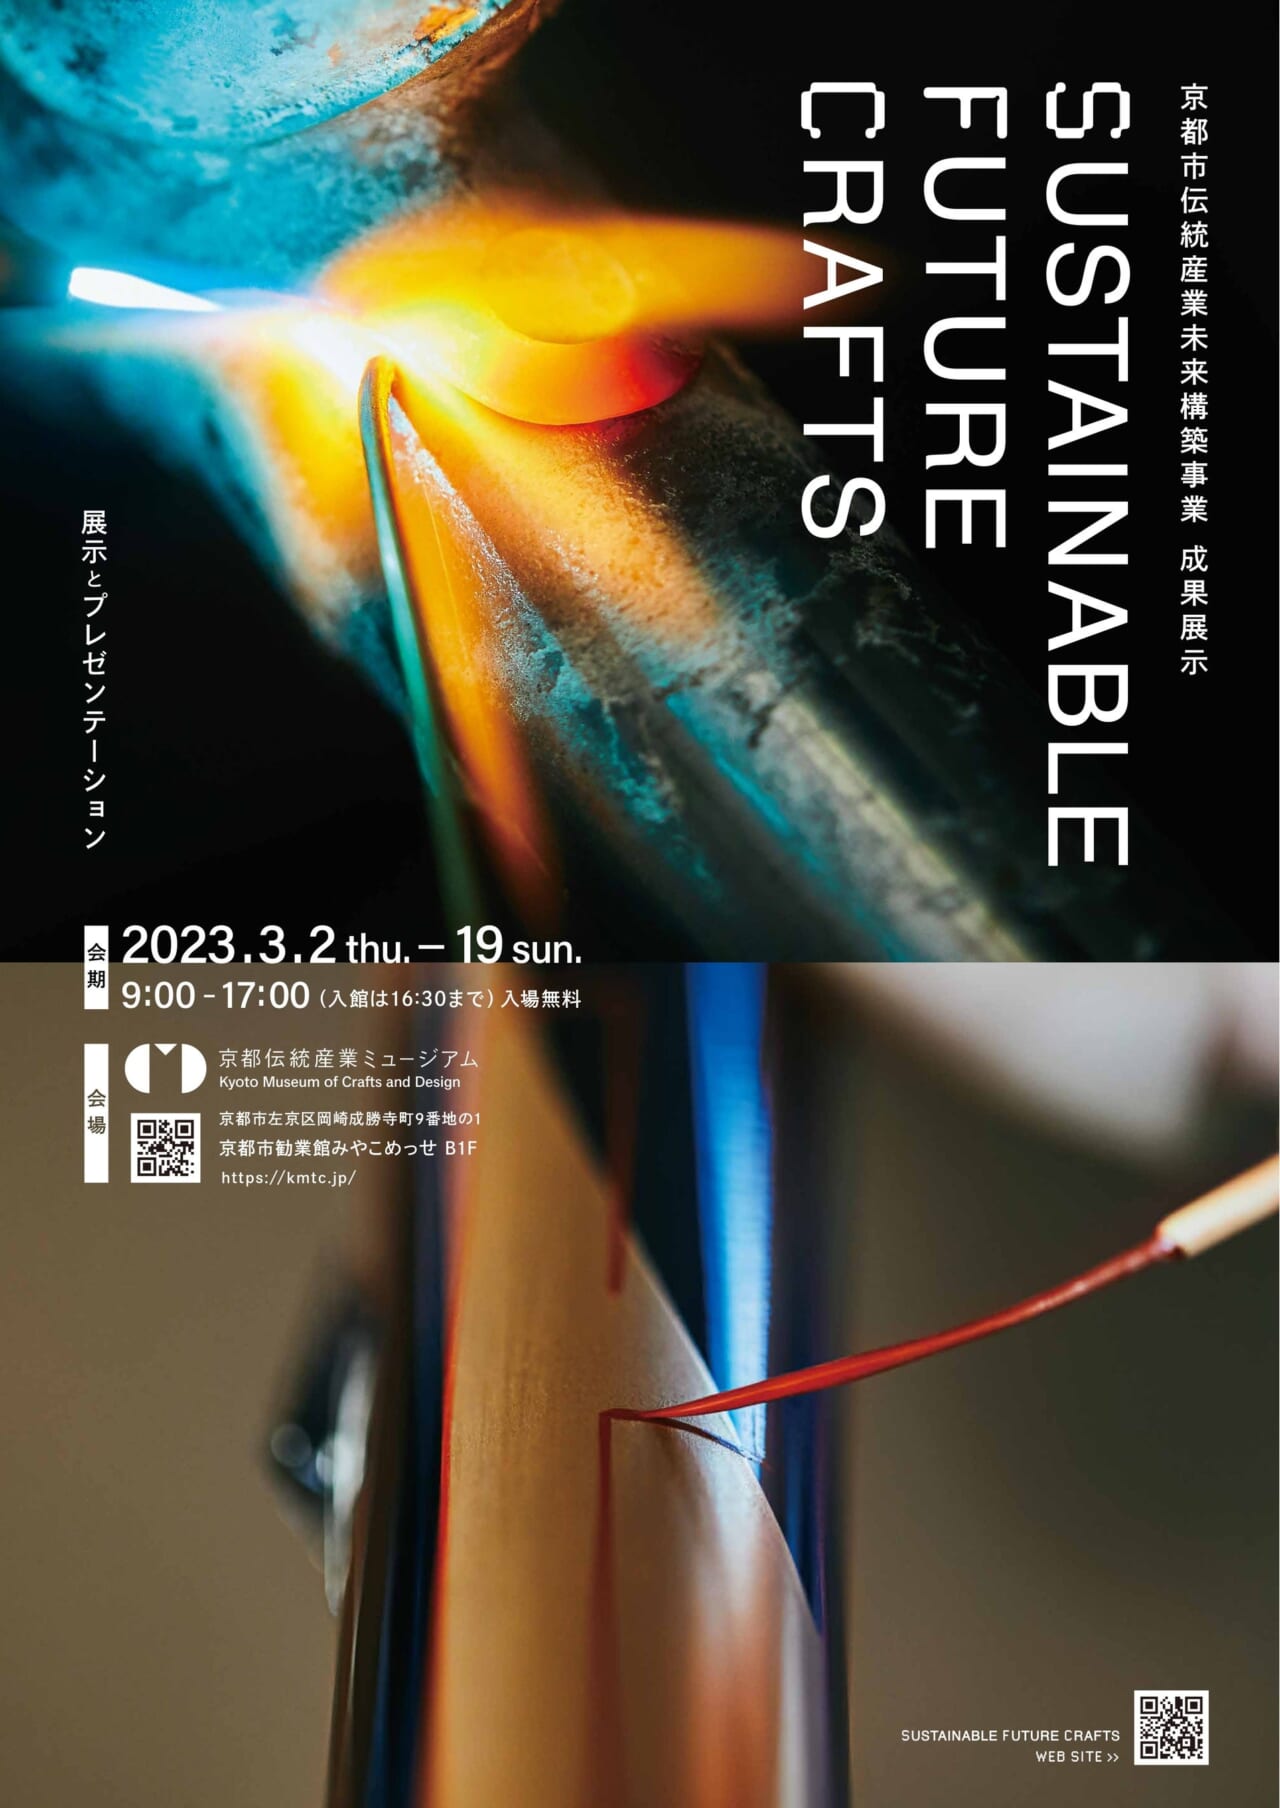 SUSTAINABLE FUTURE CRAFTS ～京都市伝統産業未来構築事業 成果展示～